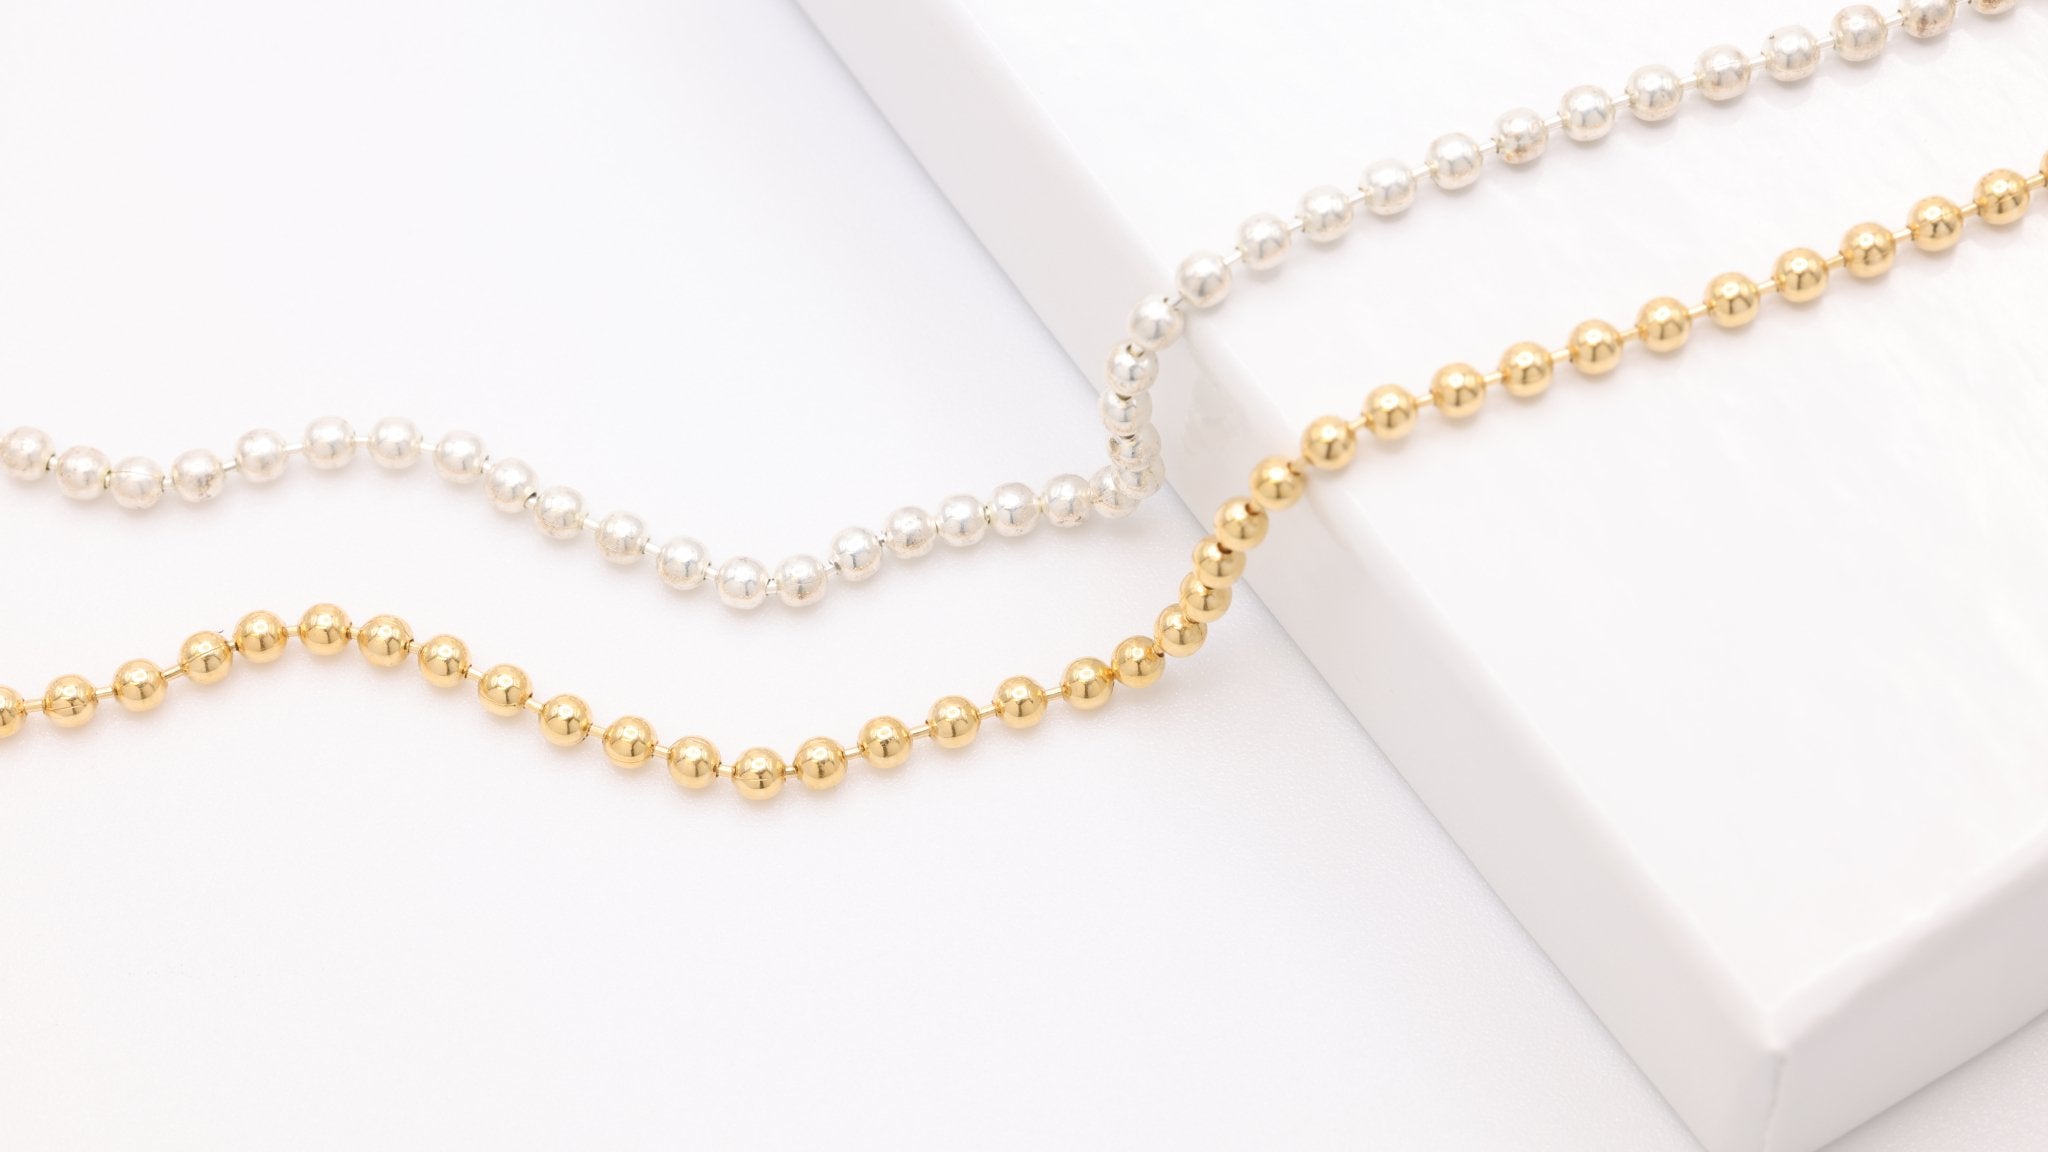 Wholesale Bead Jewelry Chain - HarperCrown